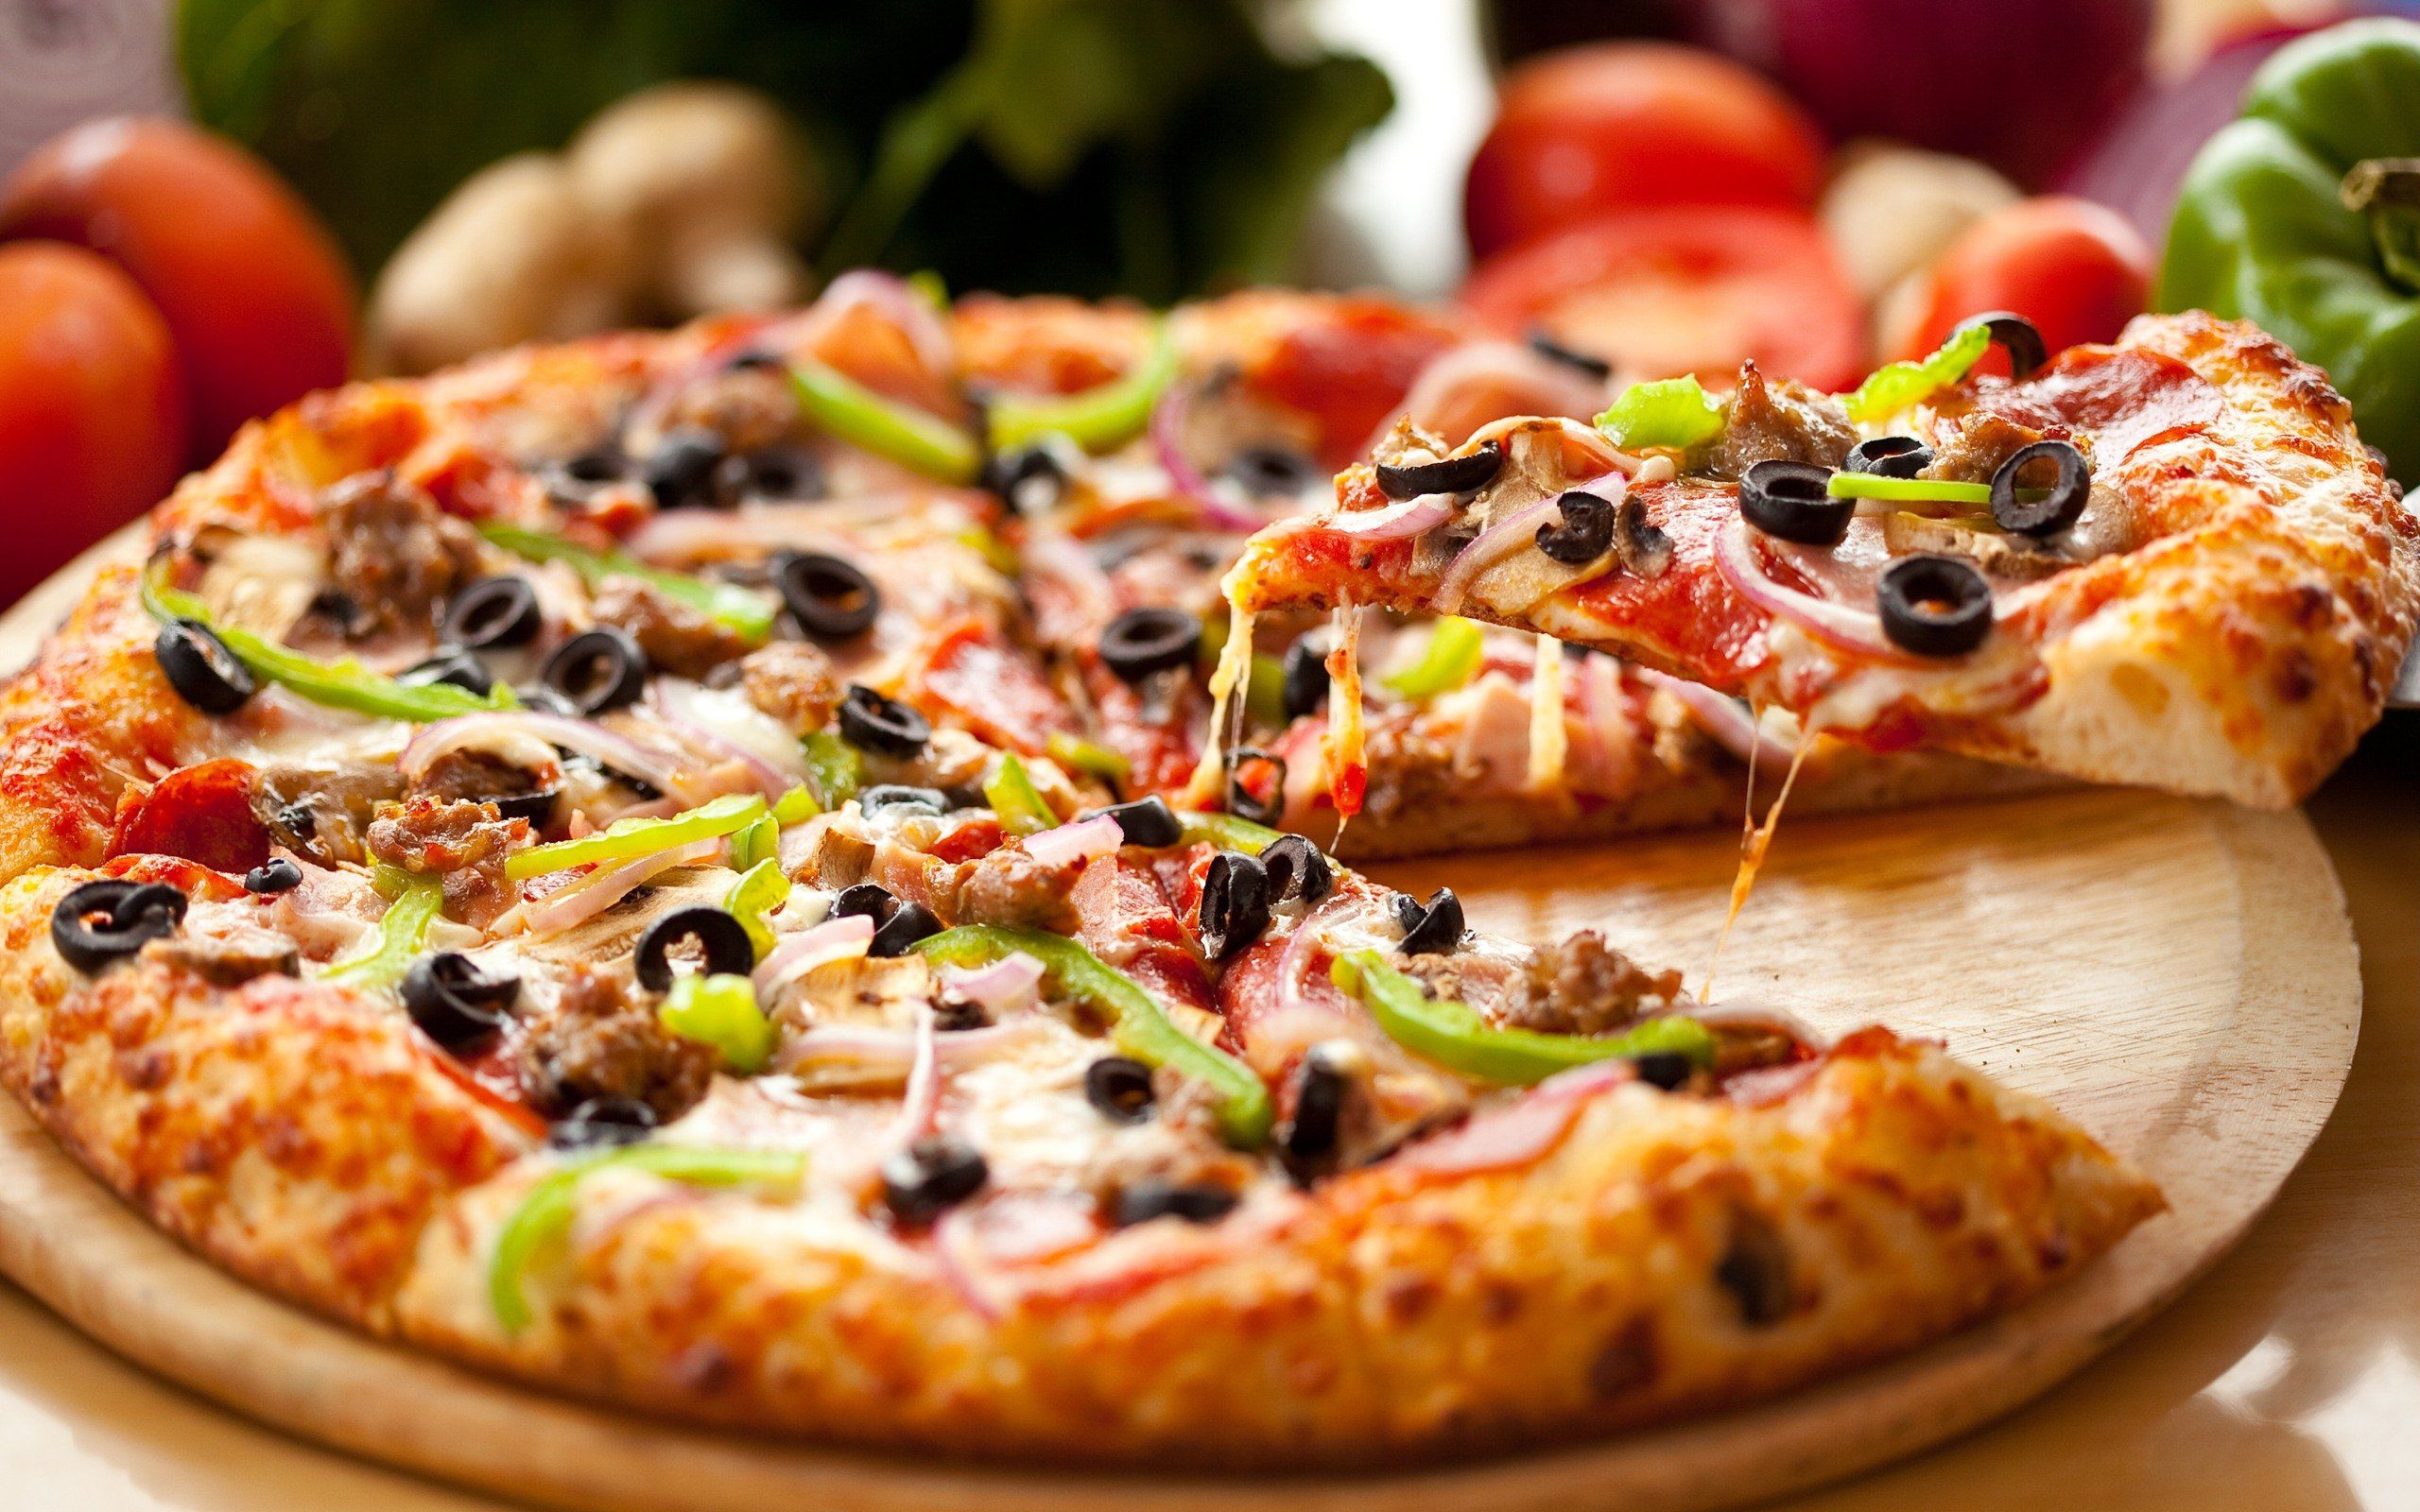 Le 5 pizze da mangiare se sei a dieta